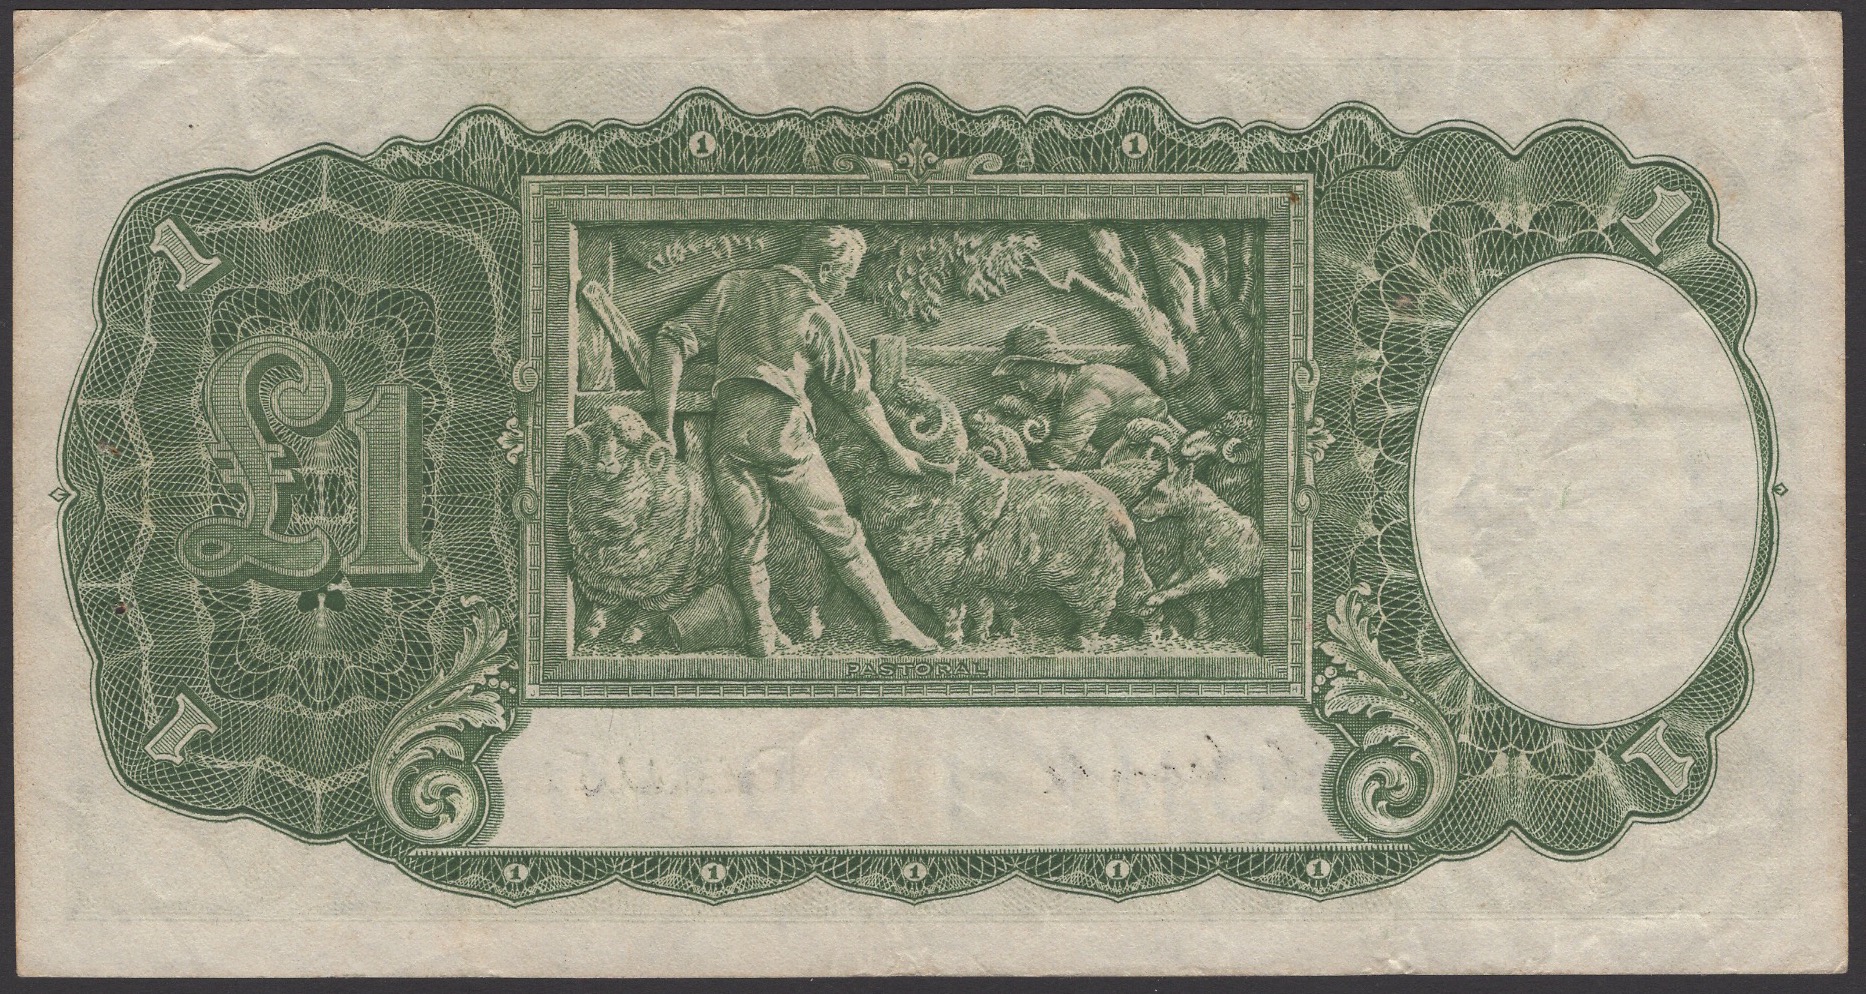 World Banknotes - Image 4 of 4